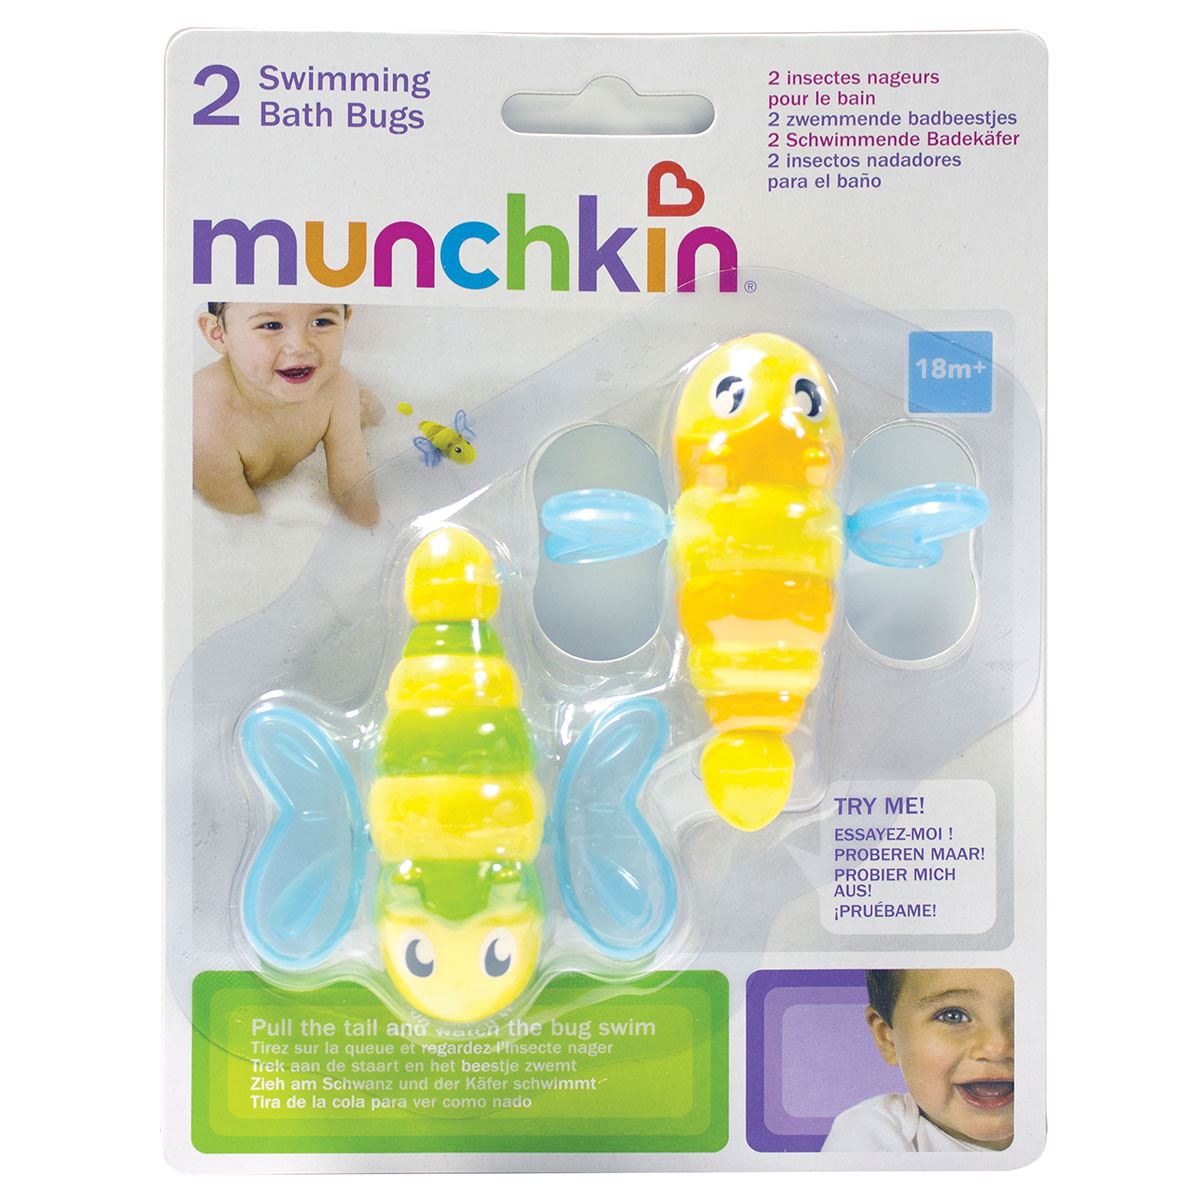 Munchkin 2 Swimming Bath Bugs